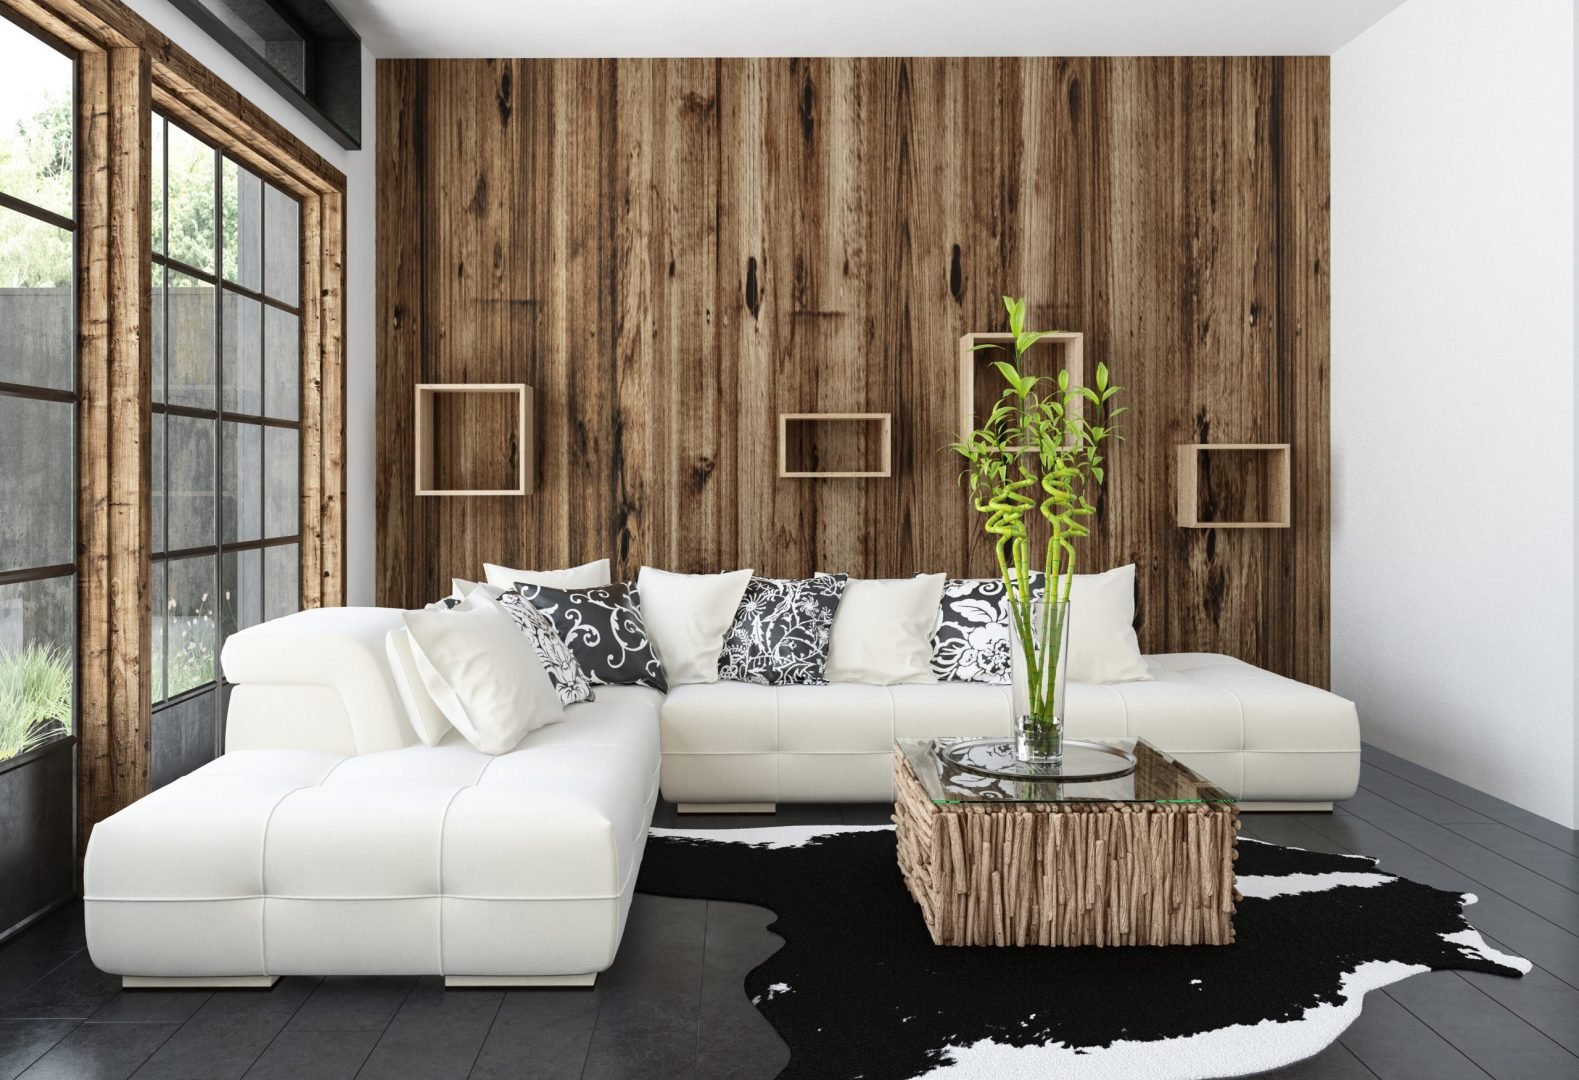 Rustic Living Room Ideas